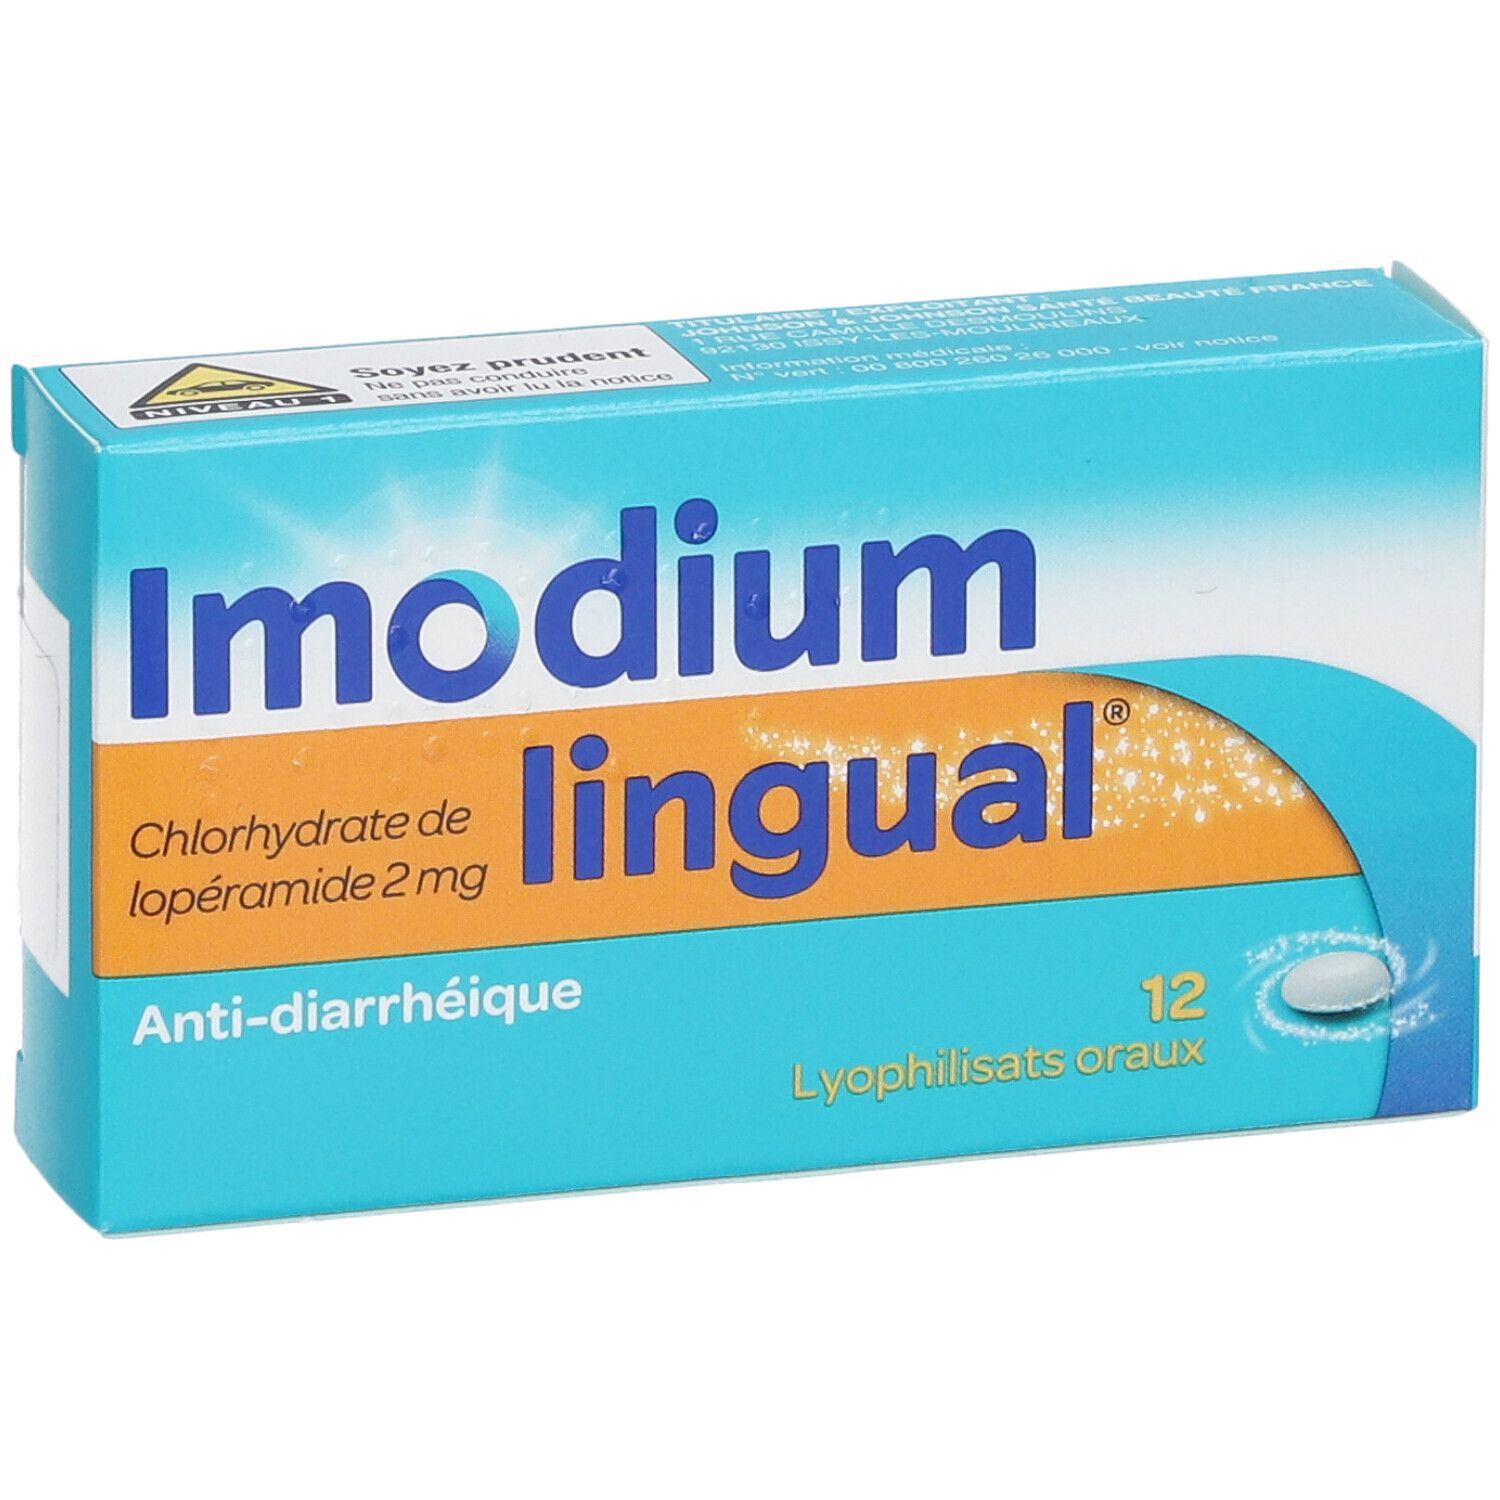 Imodium Lingual®